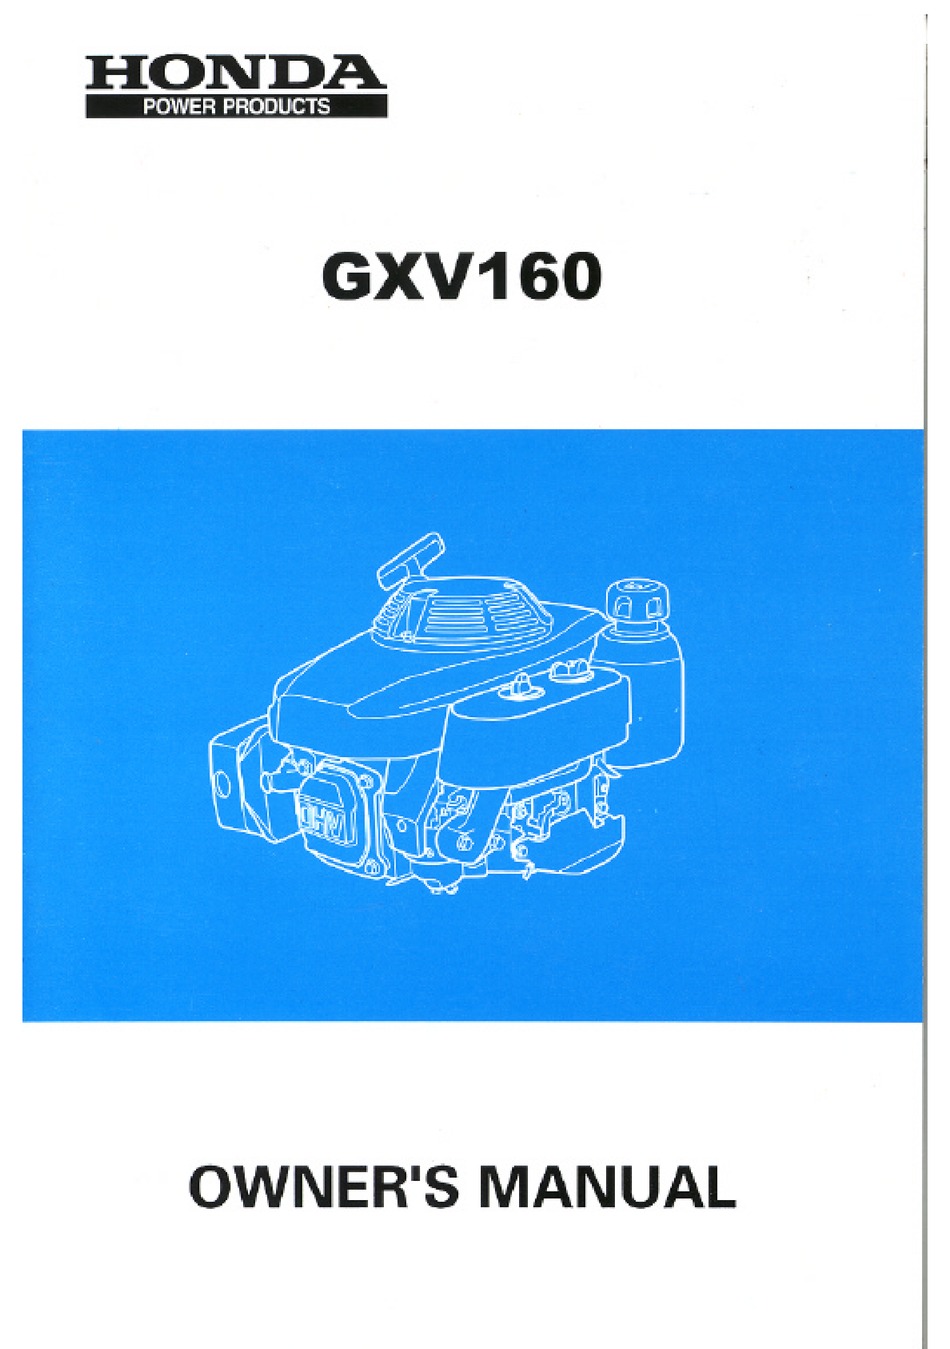 Zakje test Gewaad HONDA GXV160 OWNER'S MANUAL Pdf Download | ManualsLib